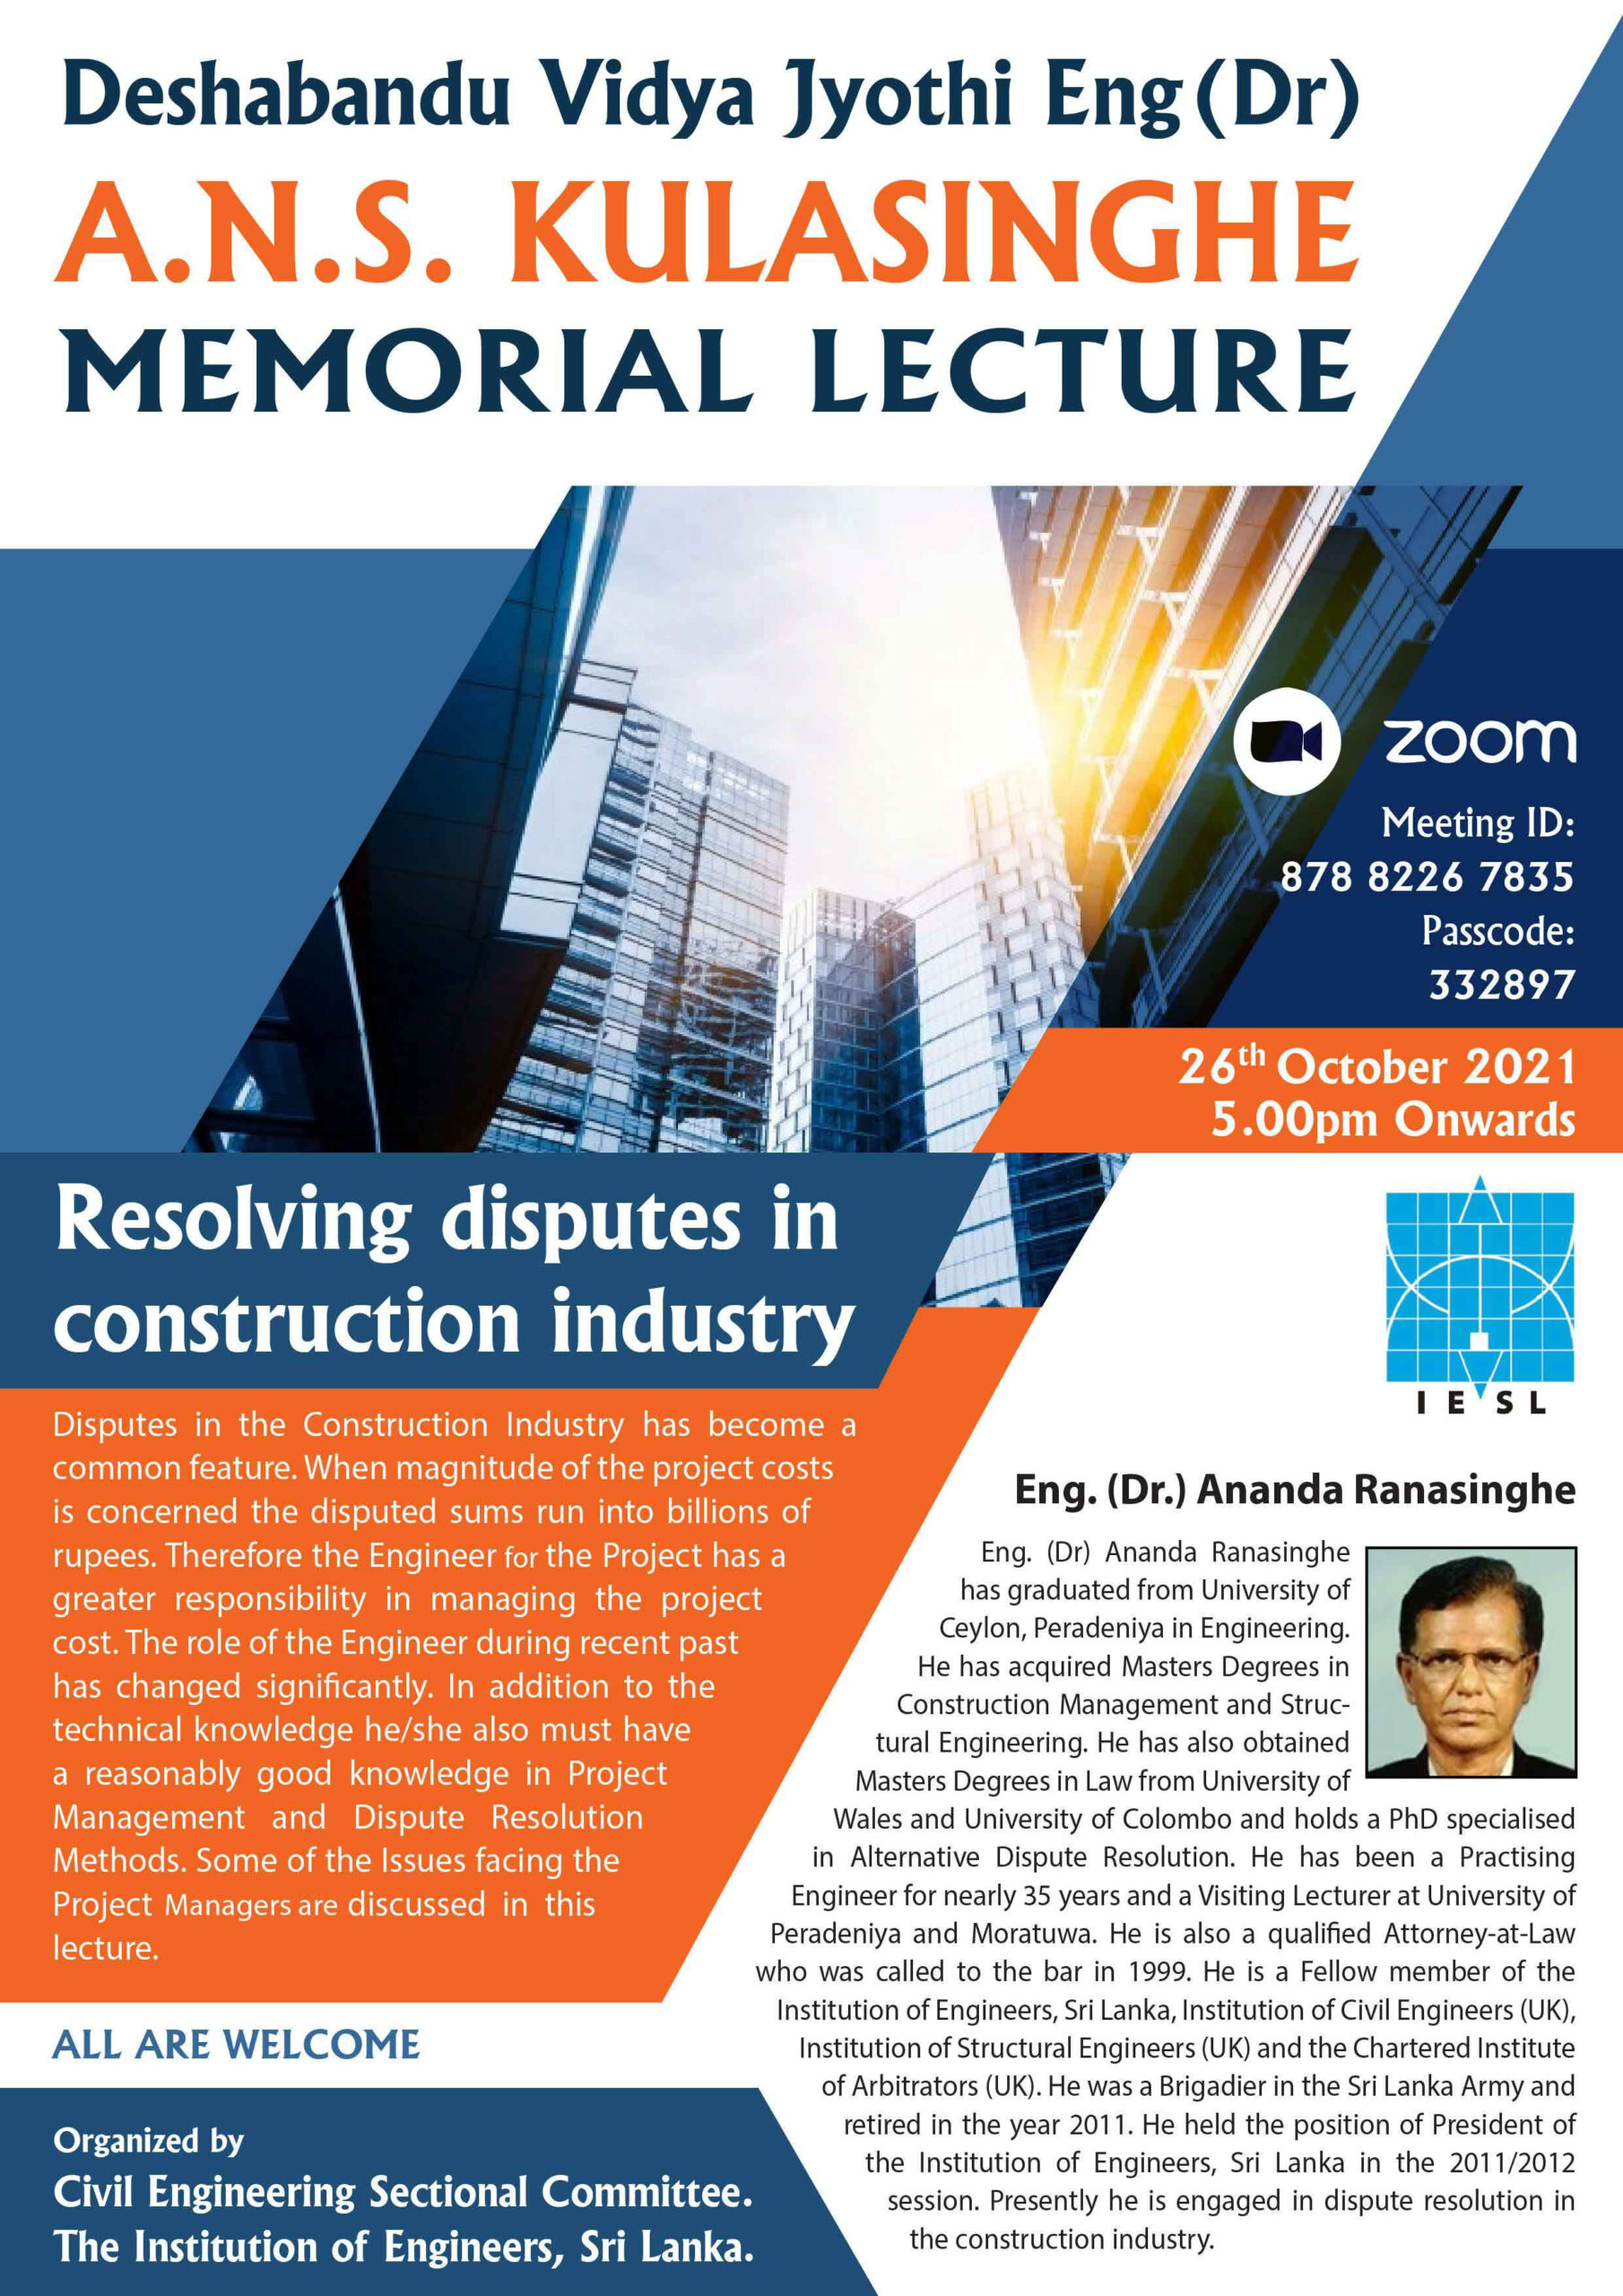 Deshabandu Vidya Jyothi Eng (Dr) A. N. S. Kulasinghe Memorial Lecture: Resolving Disputes in Construction Industry